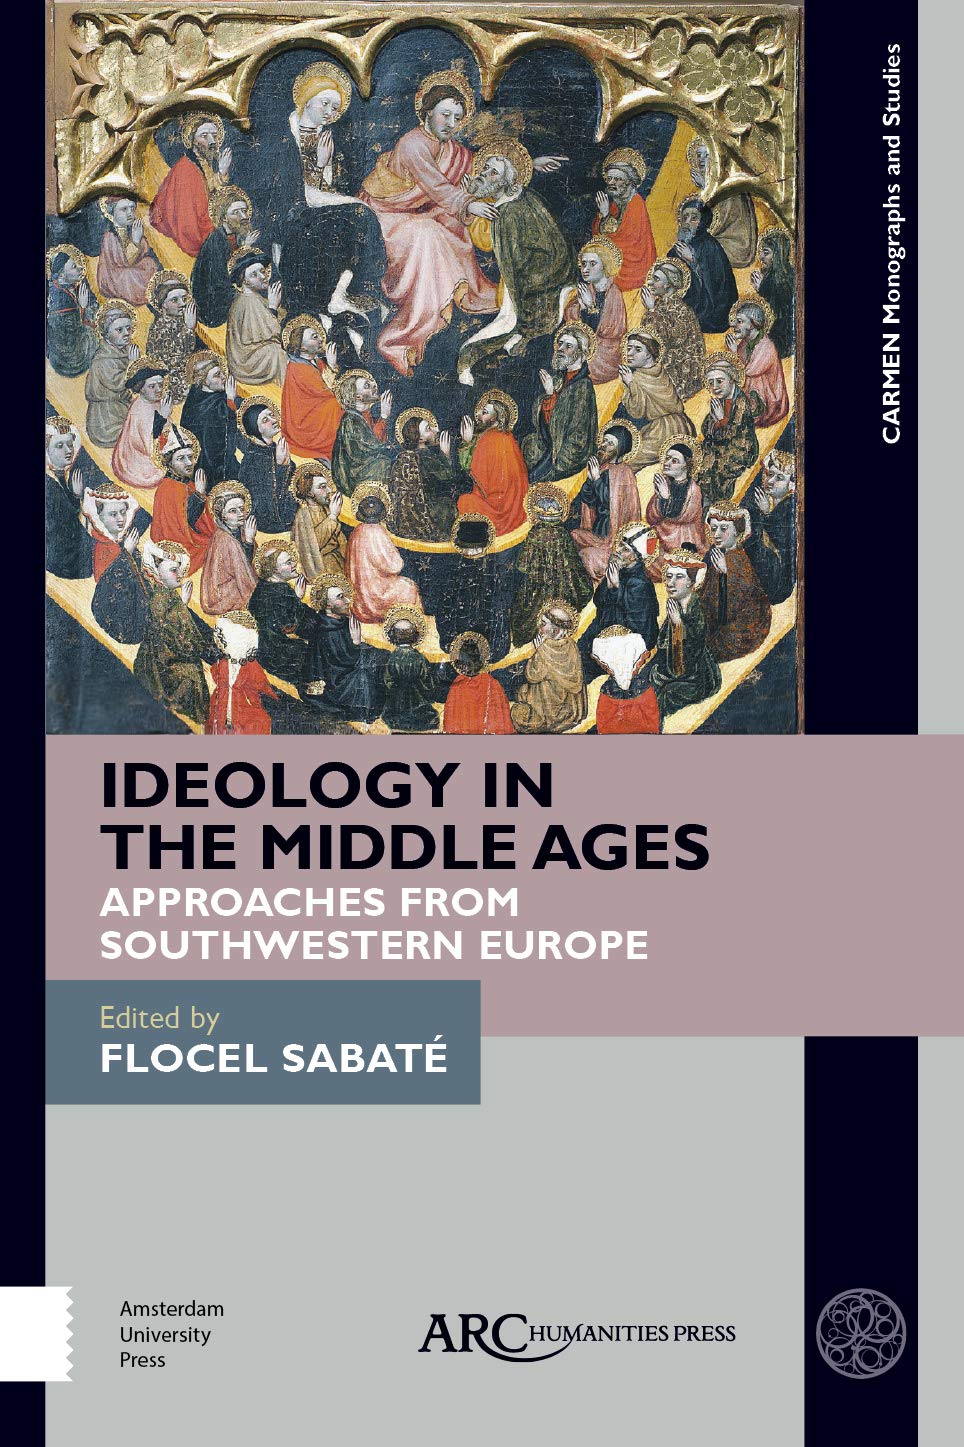 Imagen de portada del libro Ideology in the Middle Ages